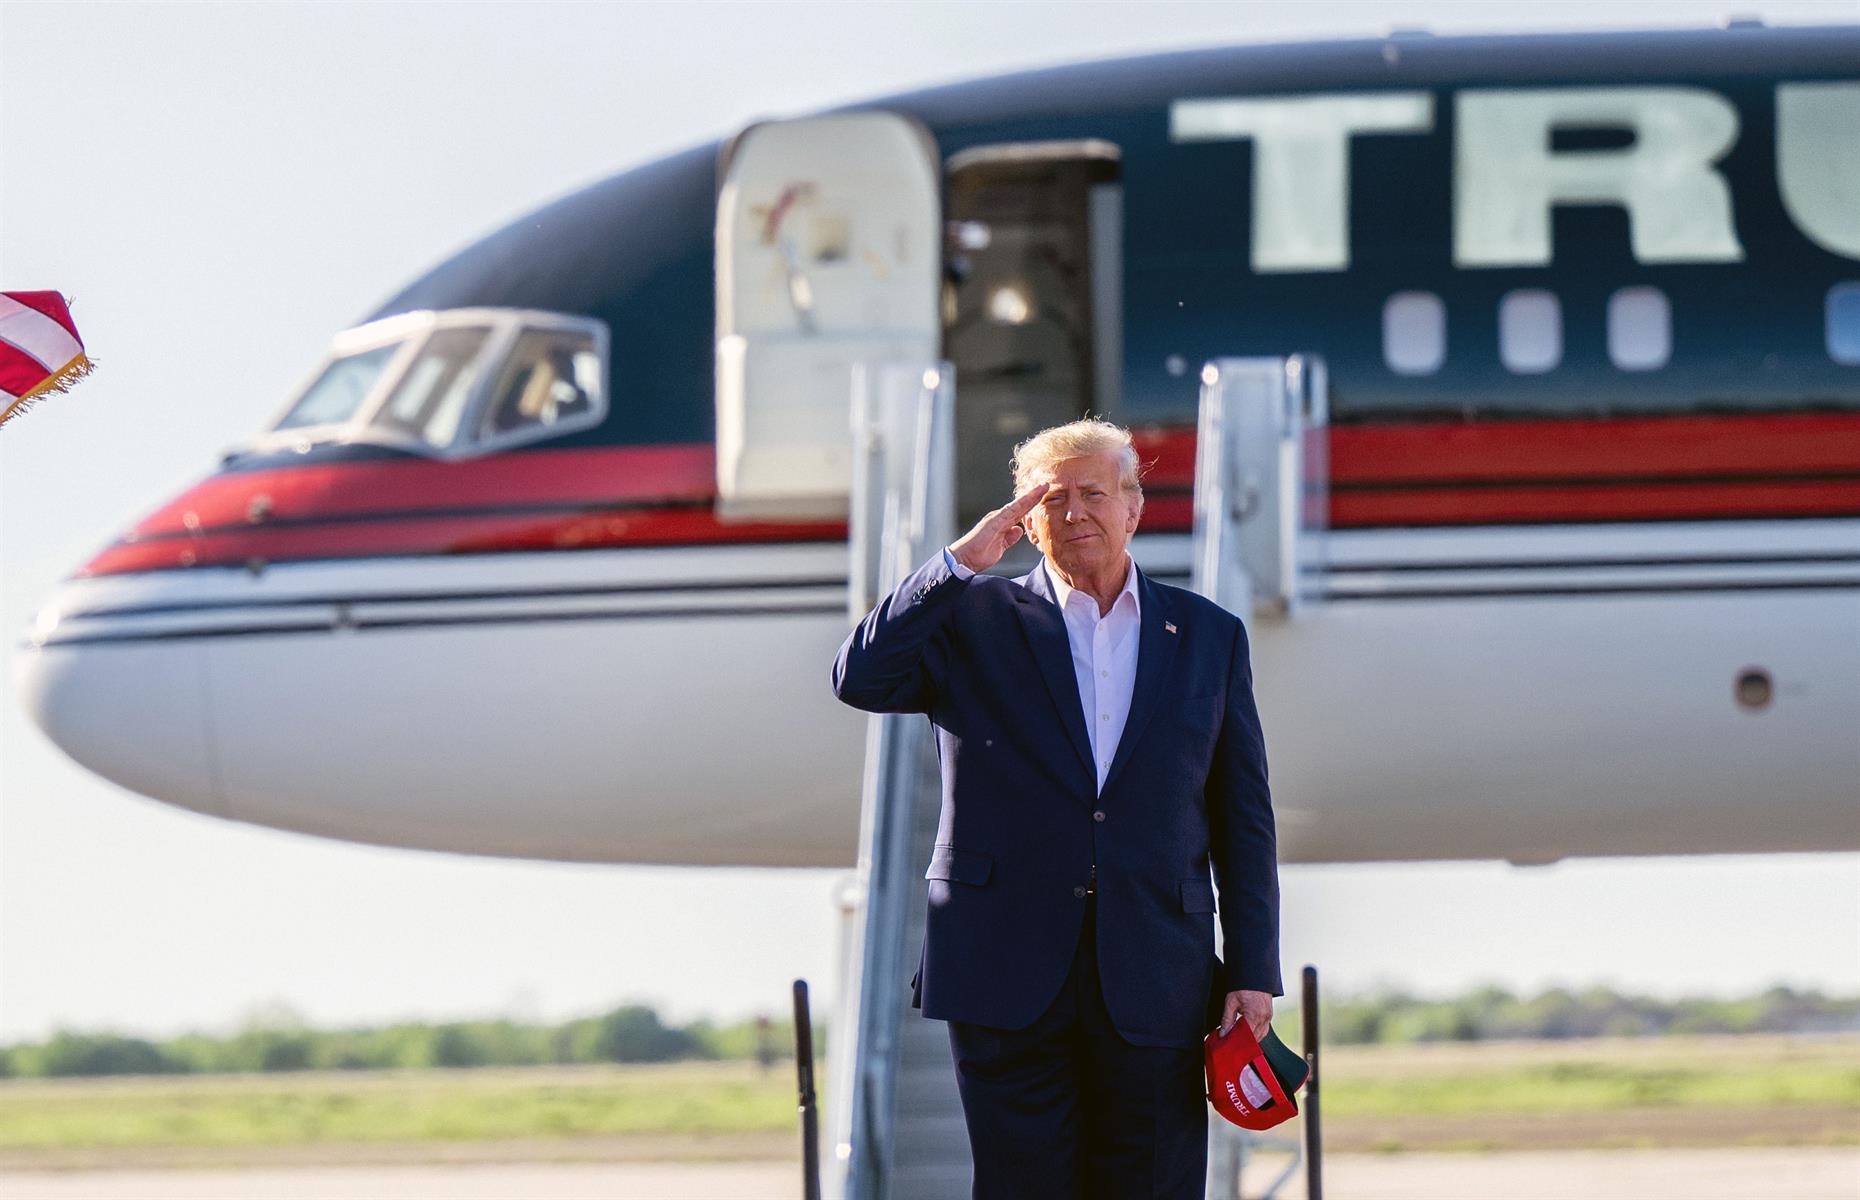 Trump's "tremendous" transport